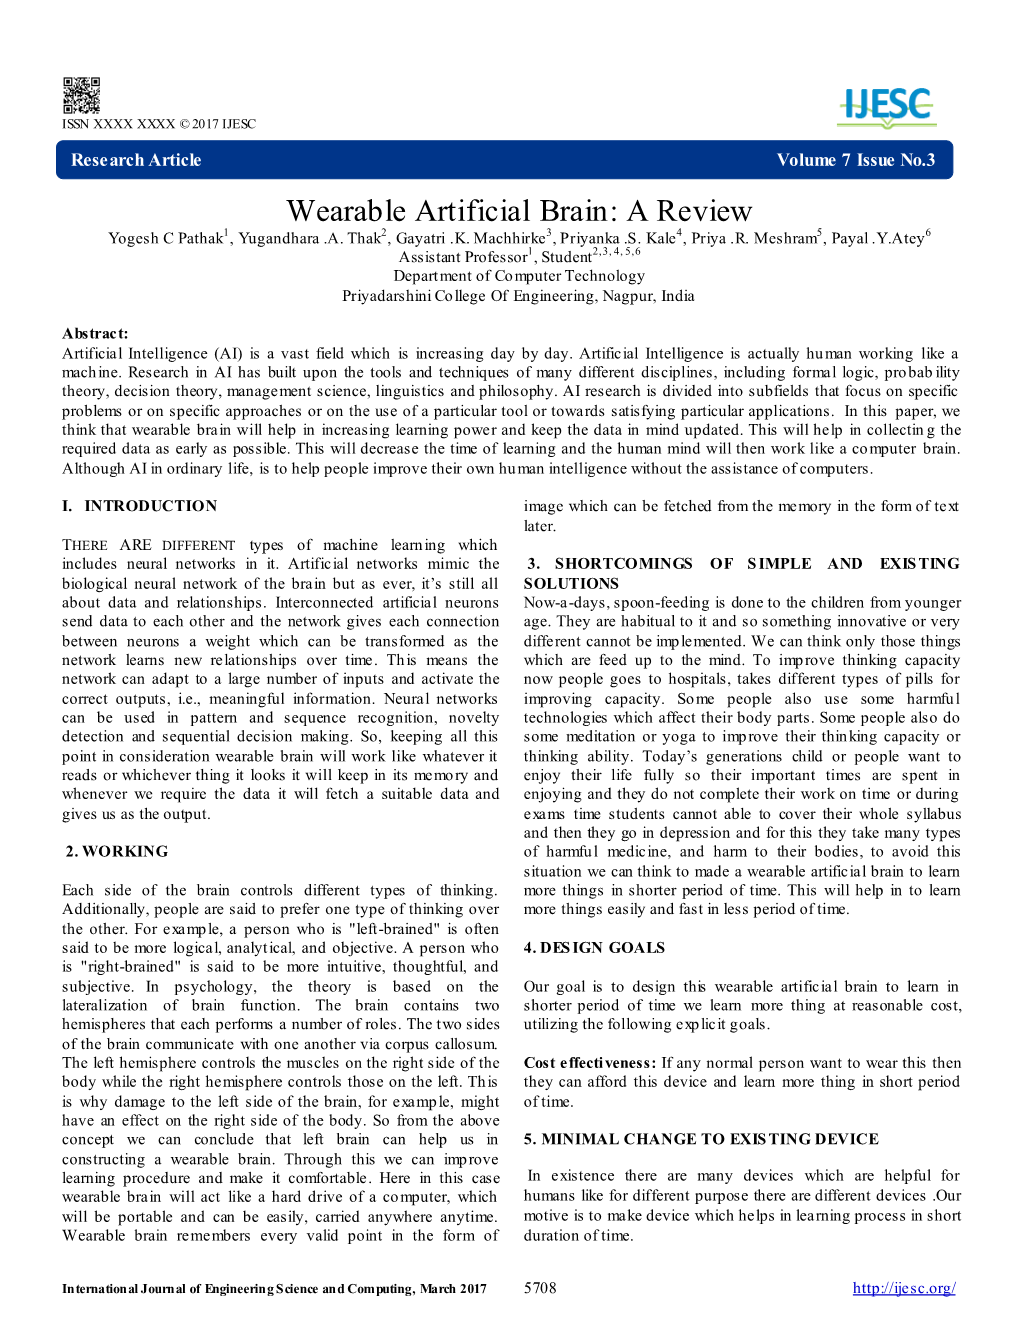 Wearable Artificial Brain: a Review Yogesh C Pathak1, Yugandhara .A